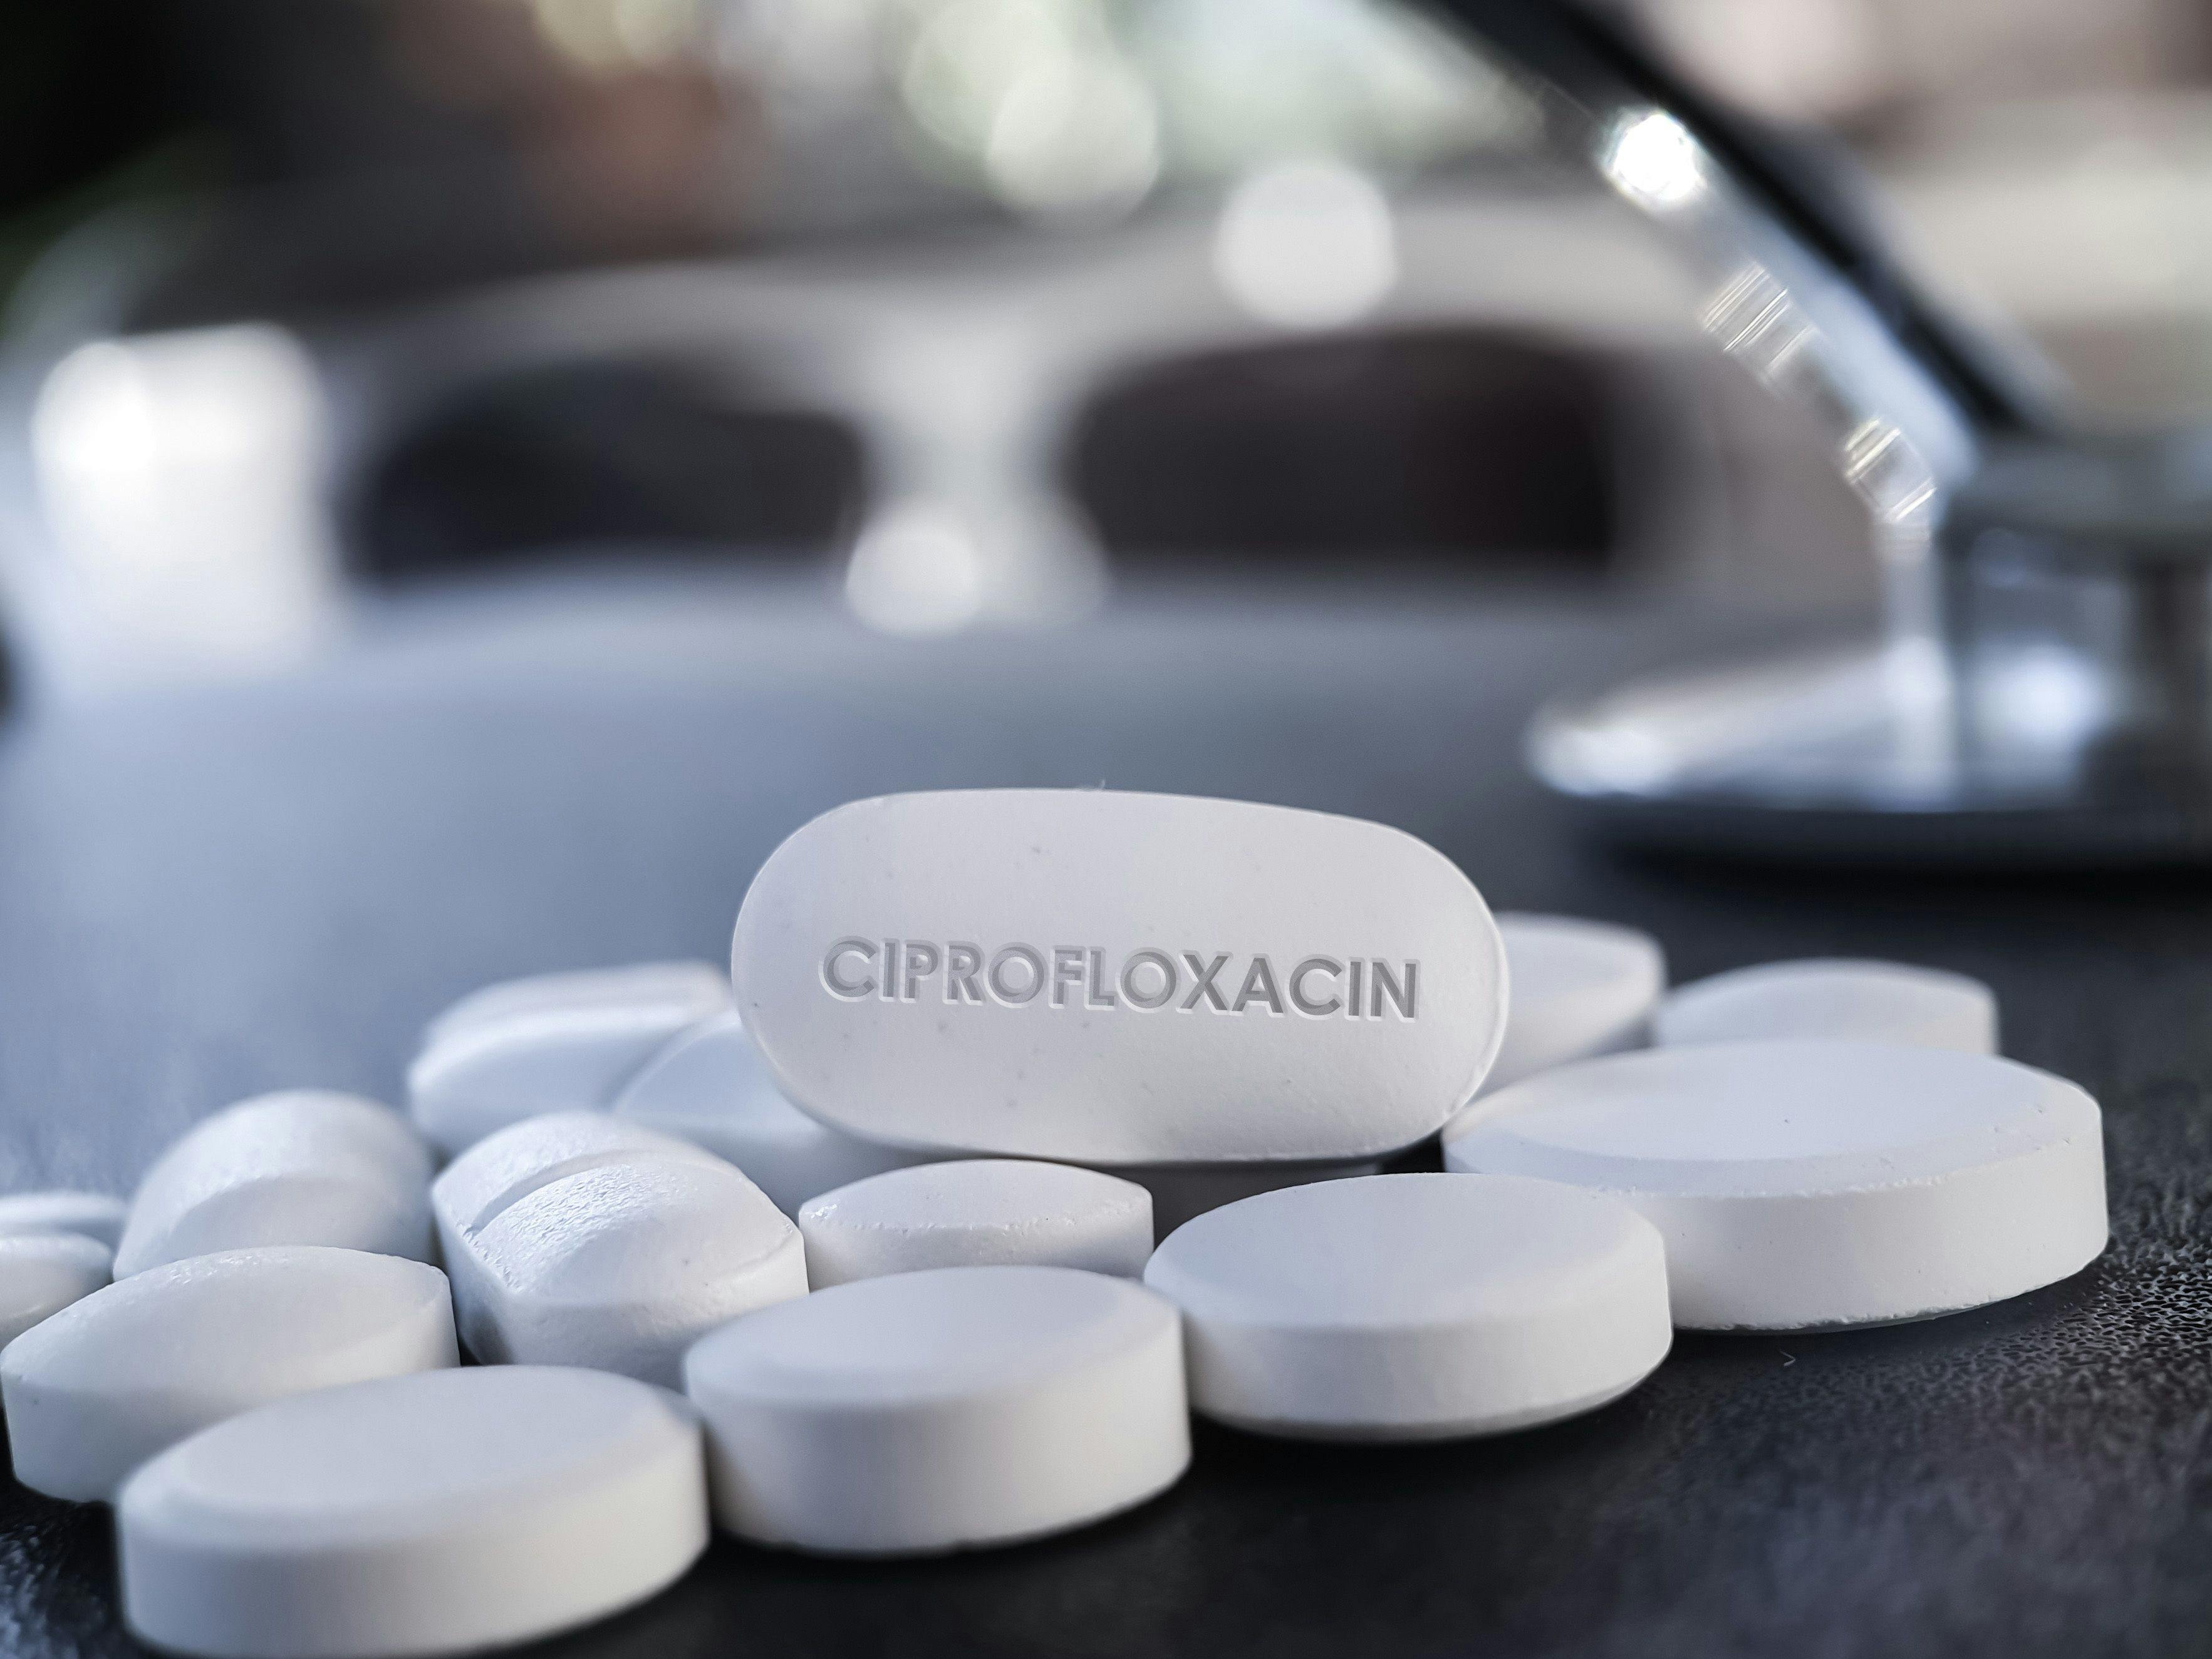 Ciprofloxacin antiobiotic white pill medication | Image Credit: © Soni's -stock.adobe.com